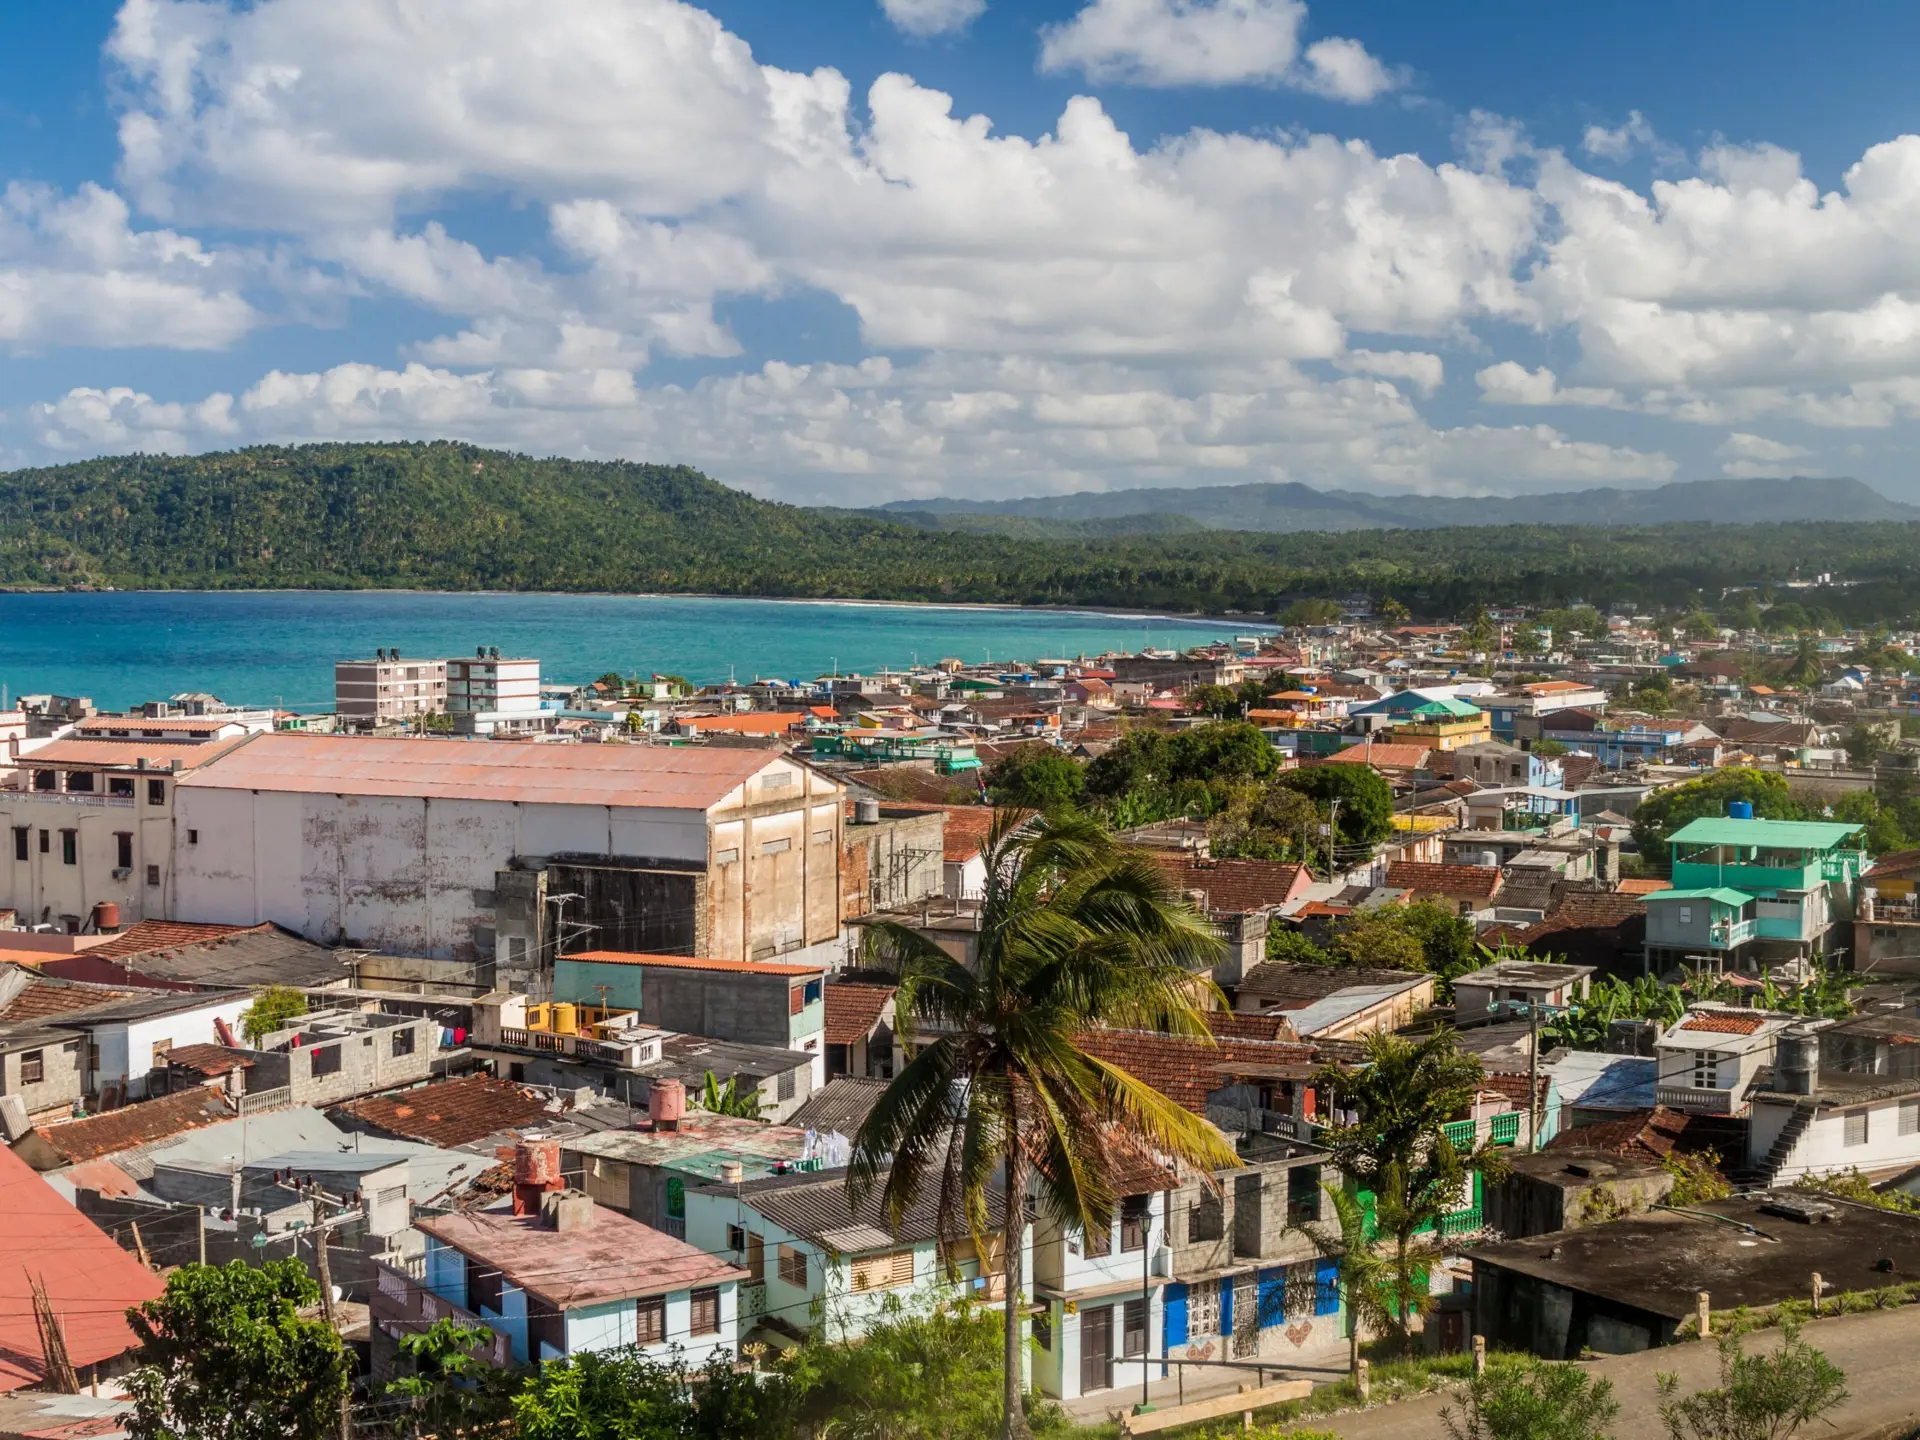 shutterstock_448467622 Aerial view of Baracoa, Cuba.jpg